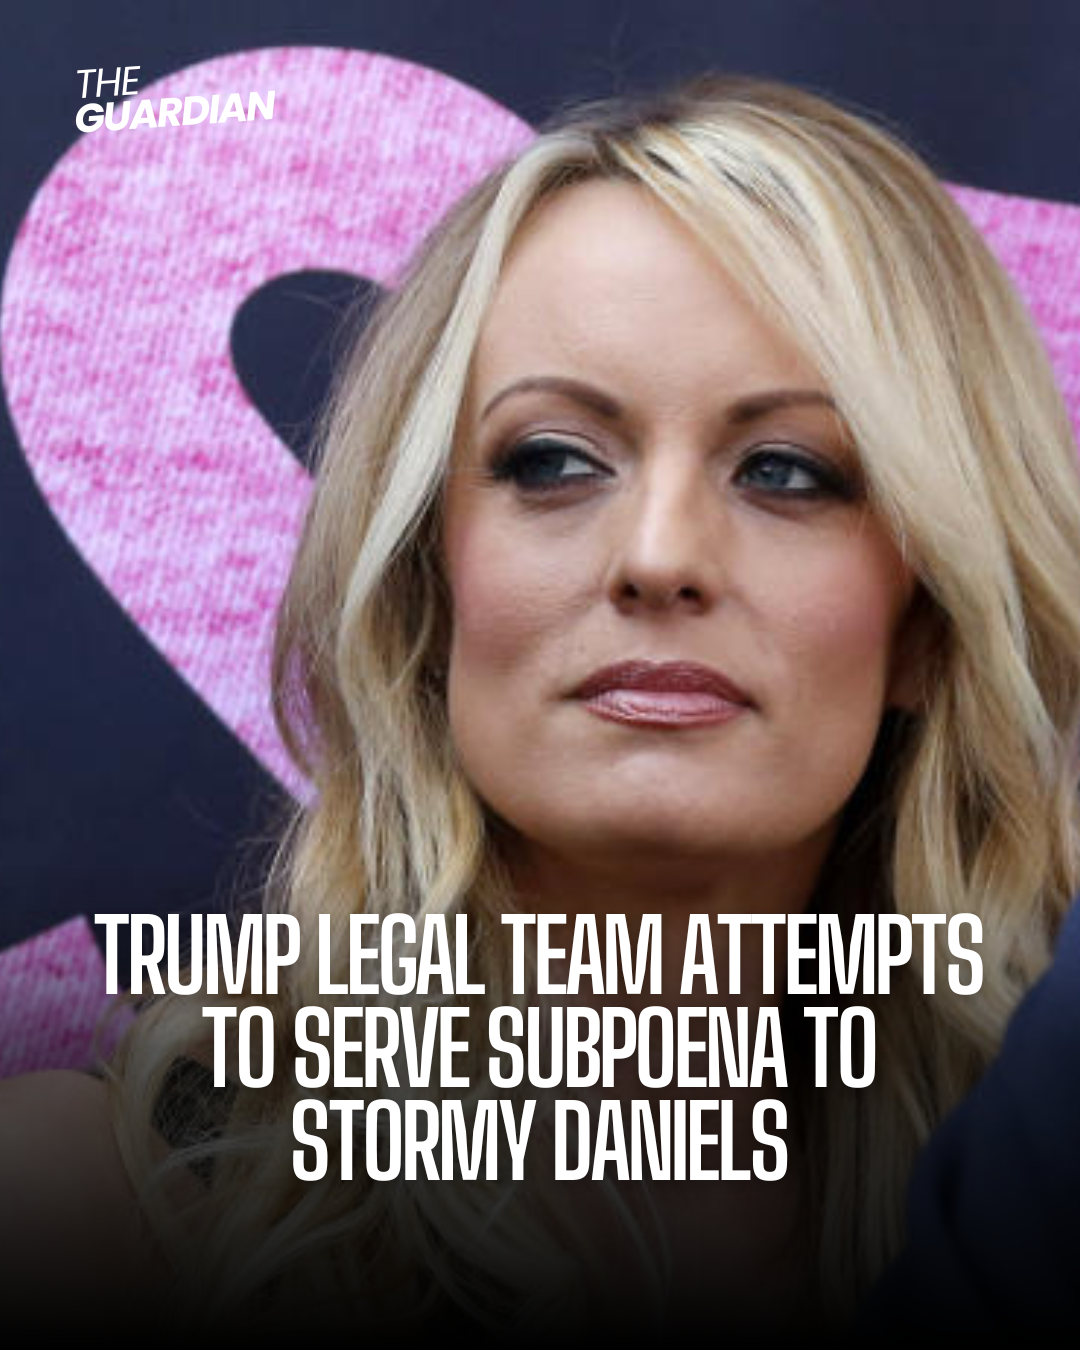 Donald Trump's legal team seeks to subpoena Stormy Daniels at a Brooklyn event, sparking a legal struggle.